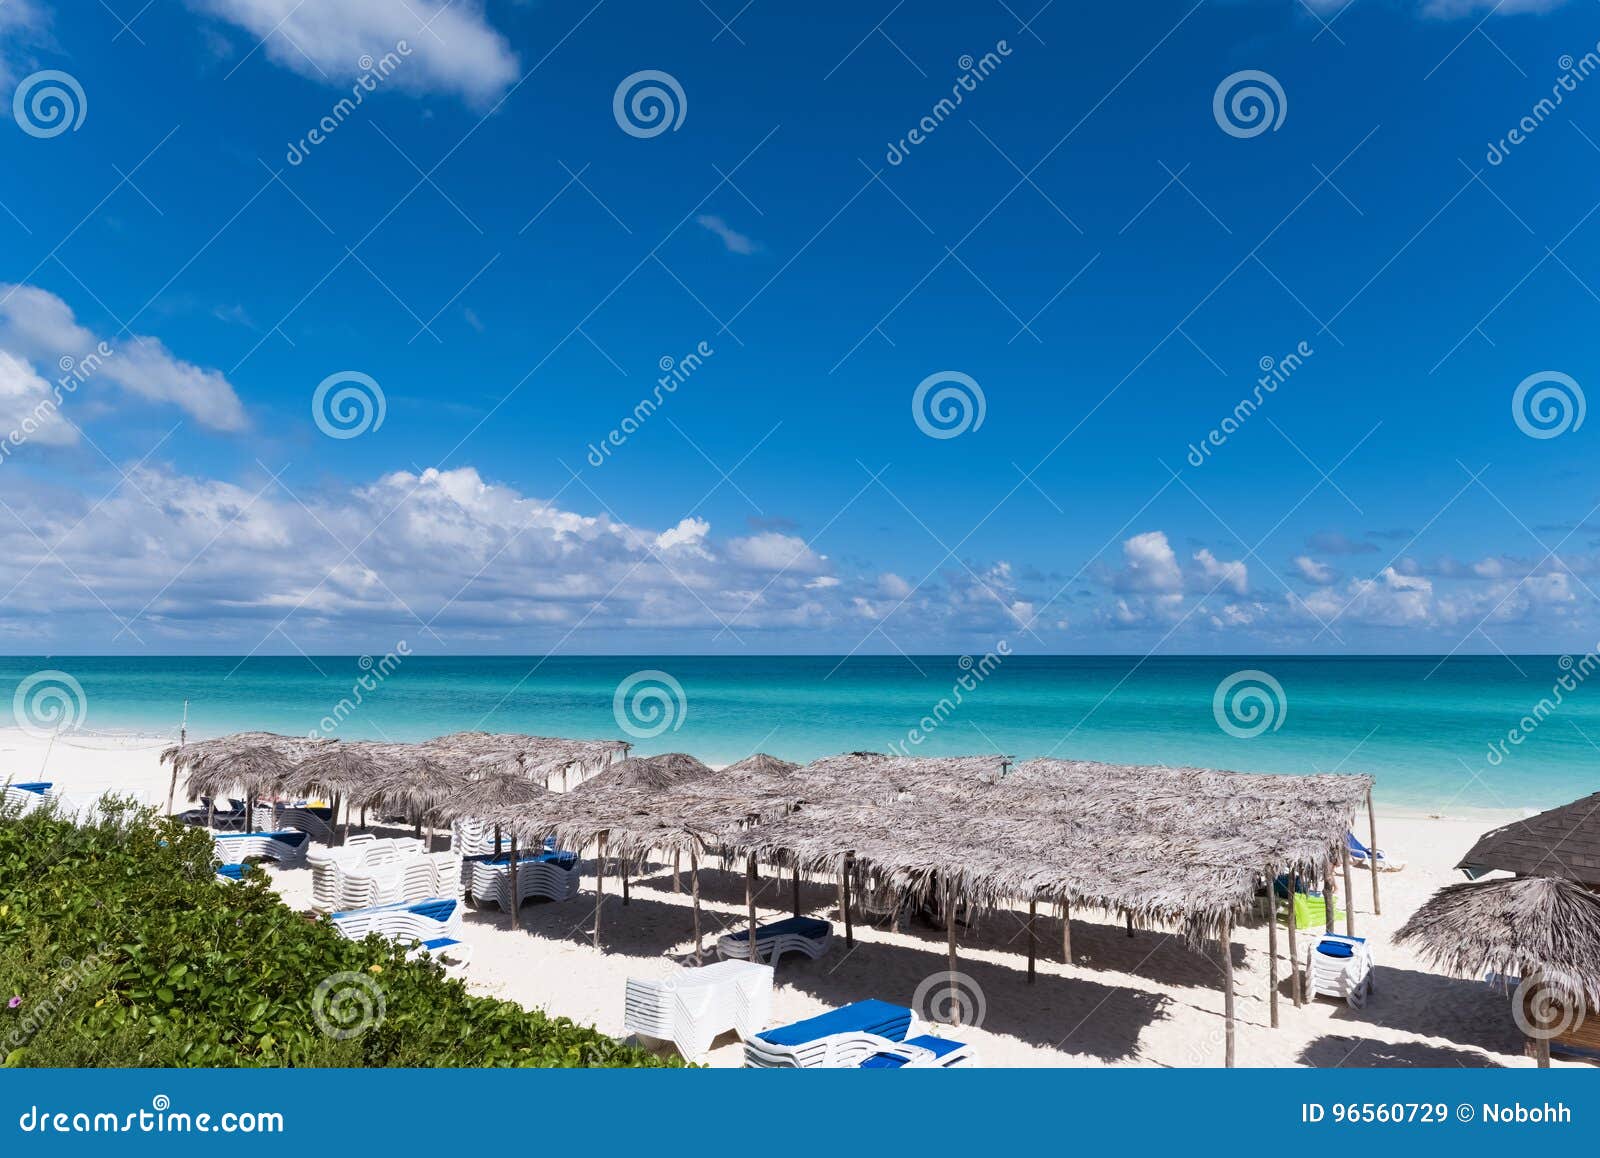 caribbean beach scenery in cayo santa maria cuba - serie cuba reportage